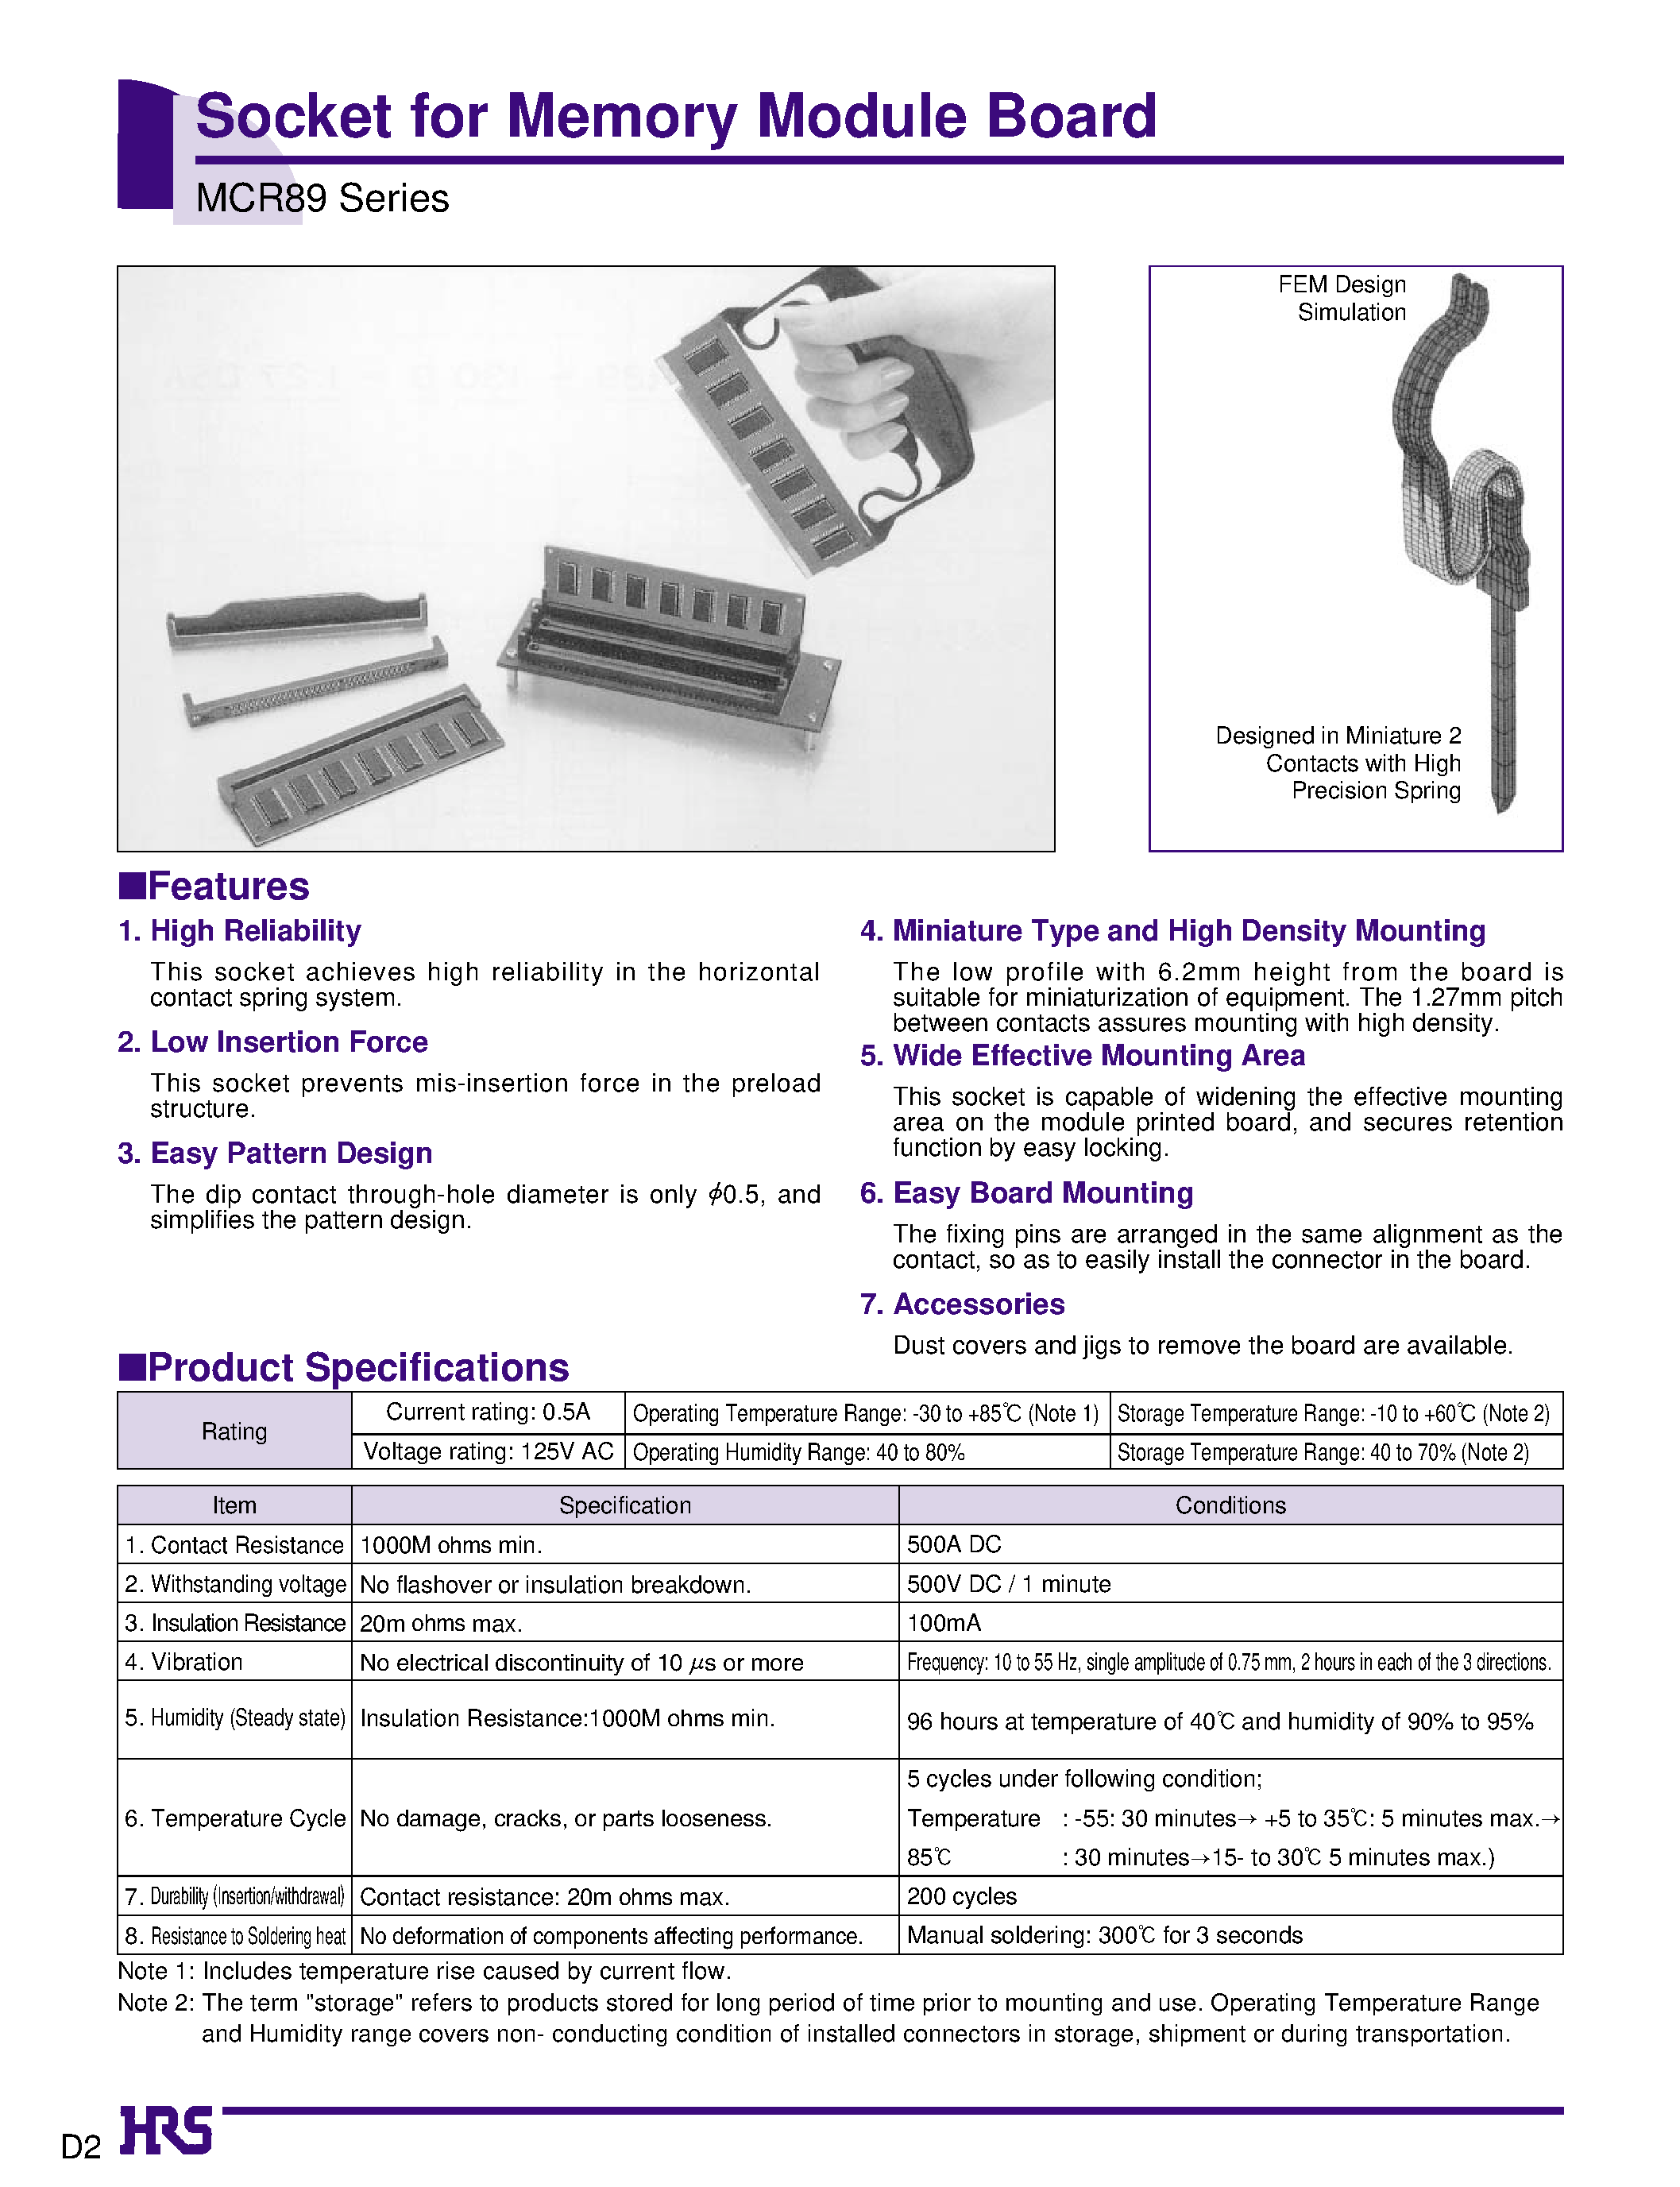 Datasheet MCR89-130D-DC - Socket for Memory Module Board page 1